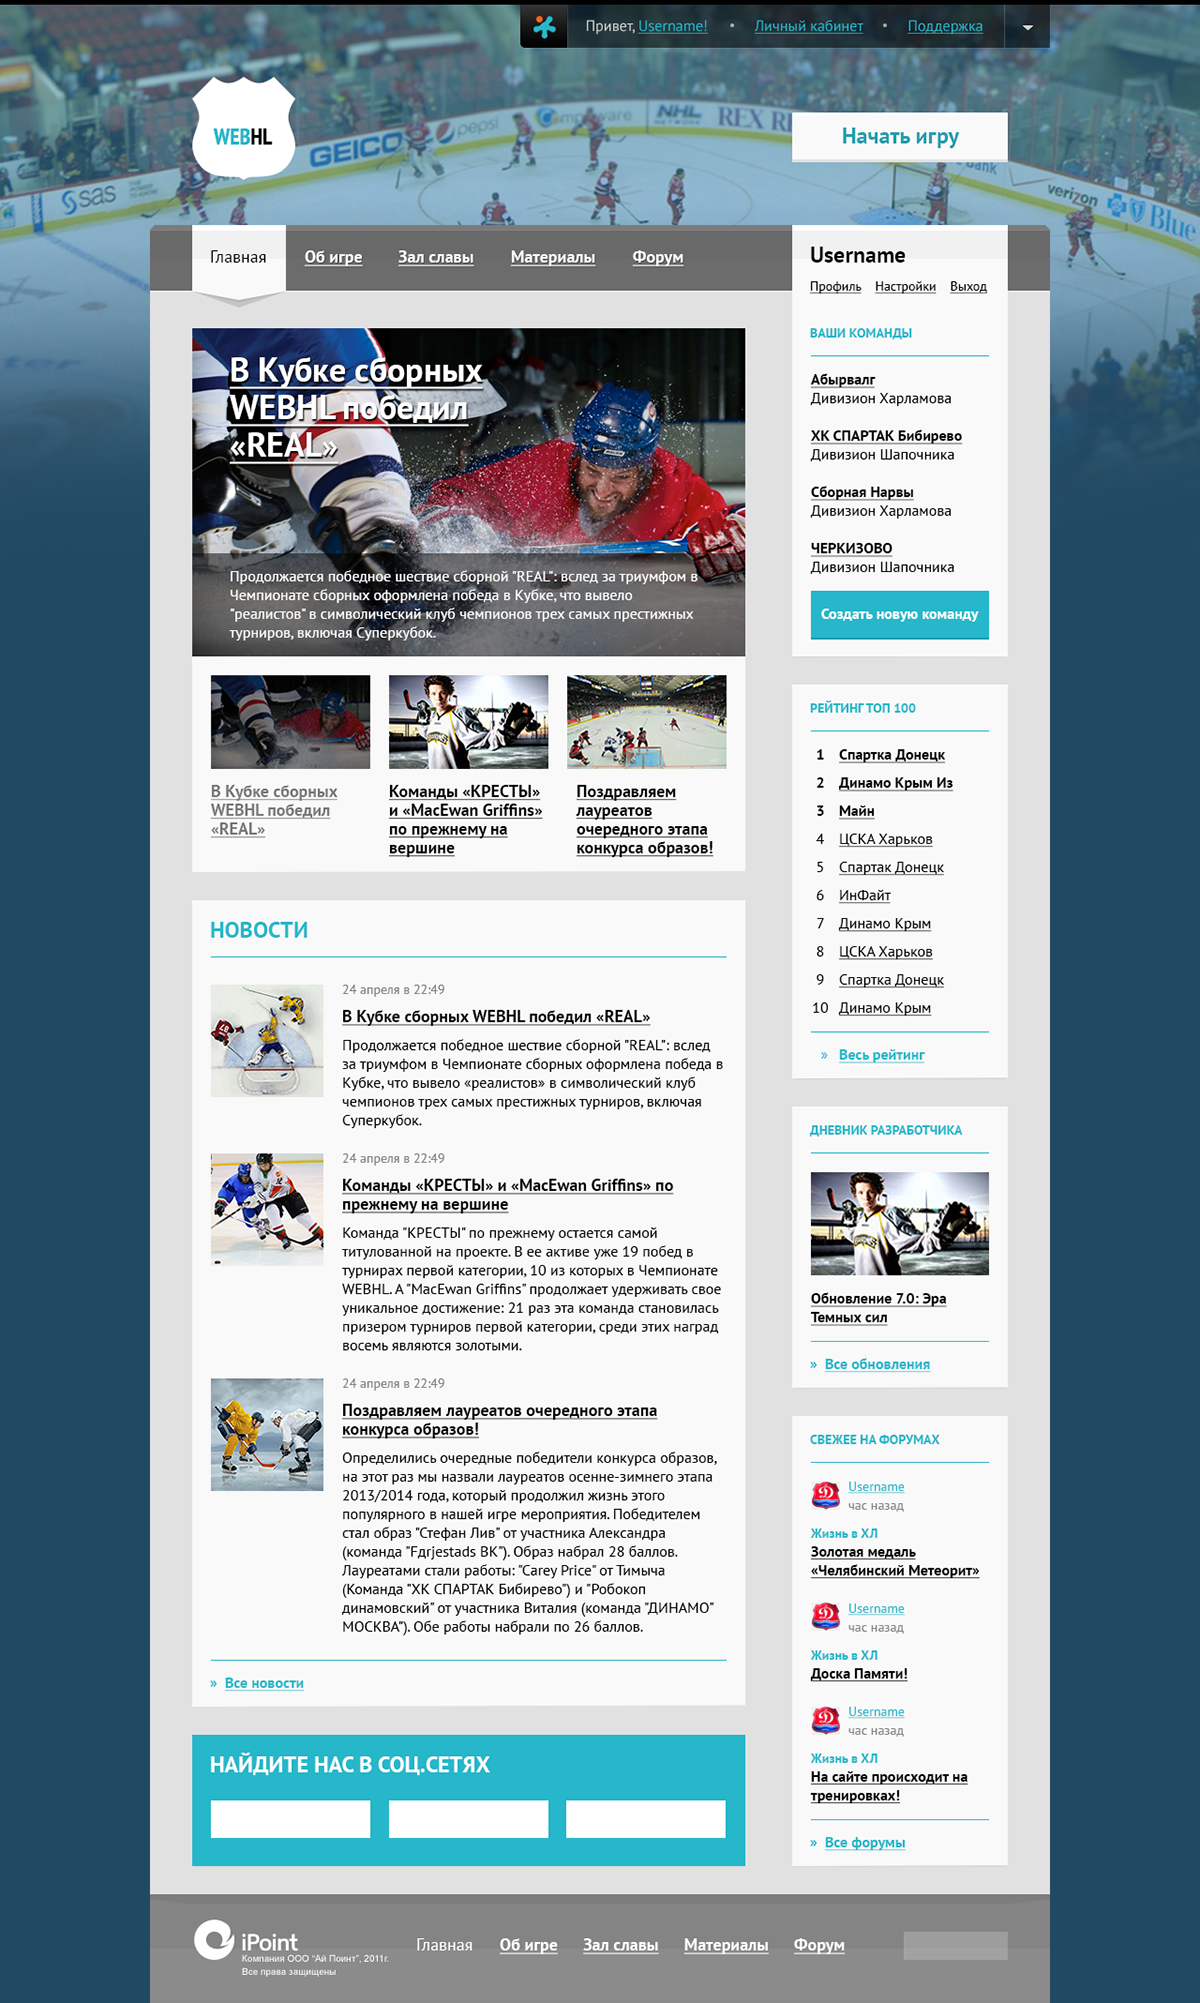 Website online gaming hockey sport